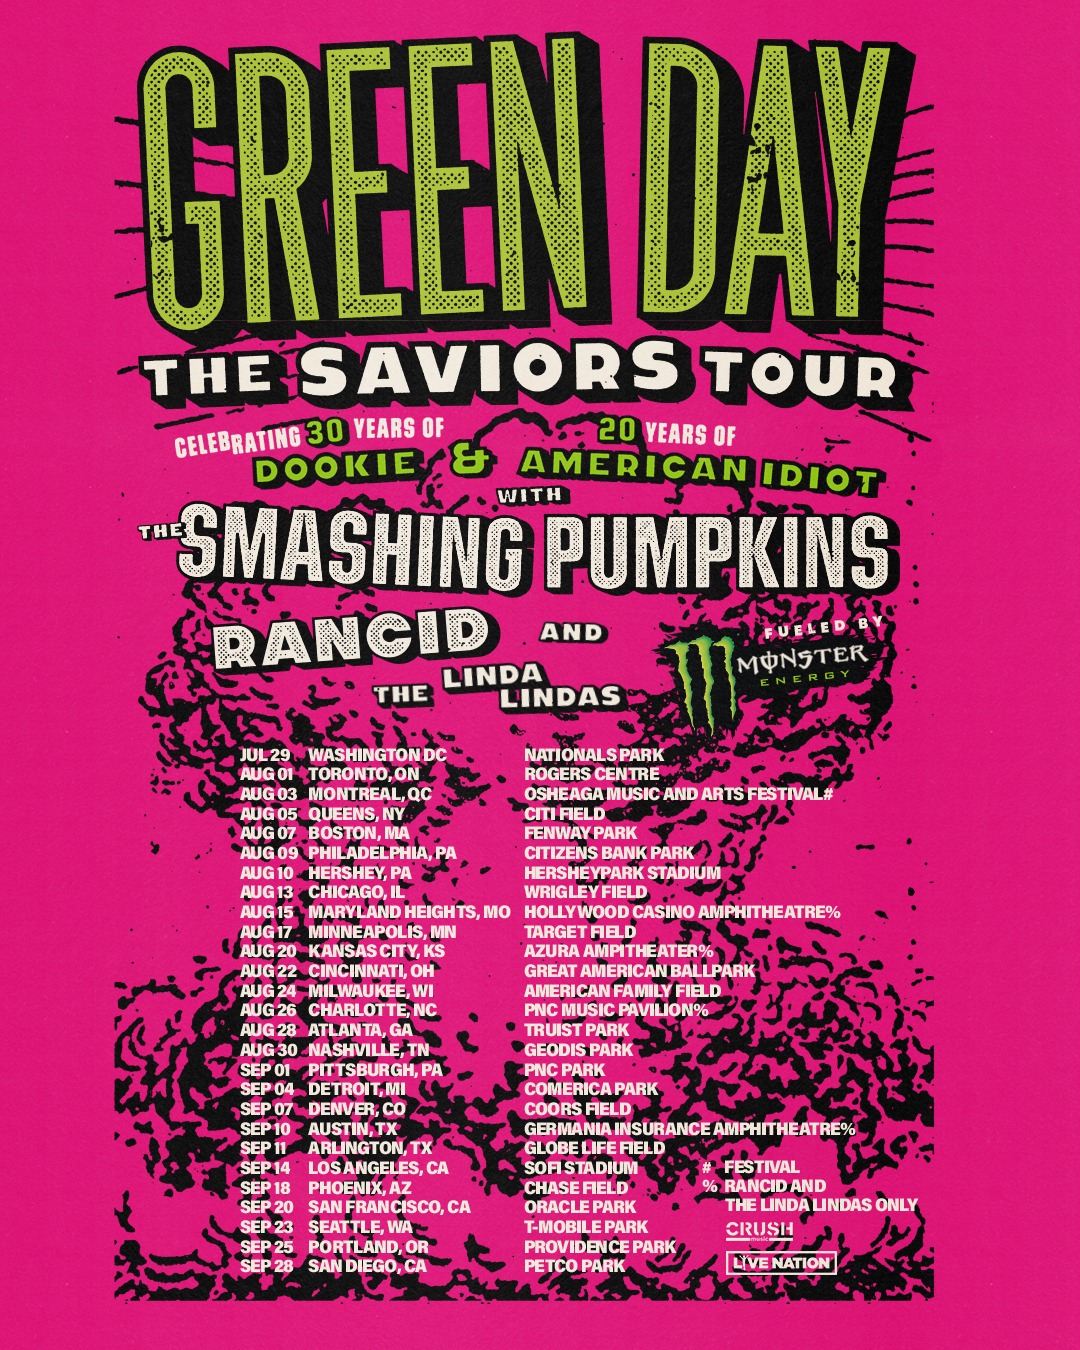 Green Day Announces the Saviors World Tour with Smashing Pumpkins